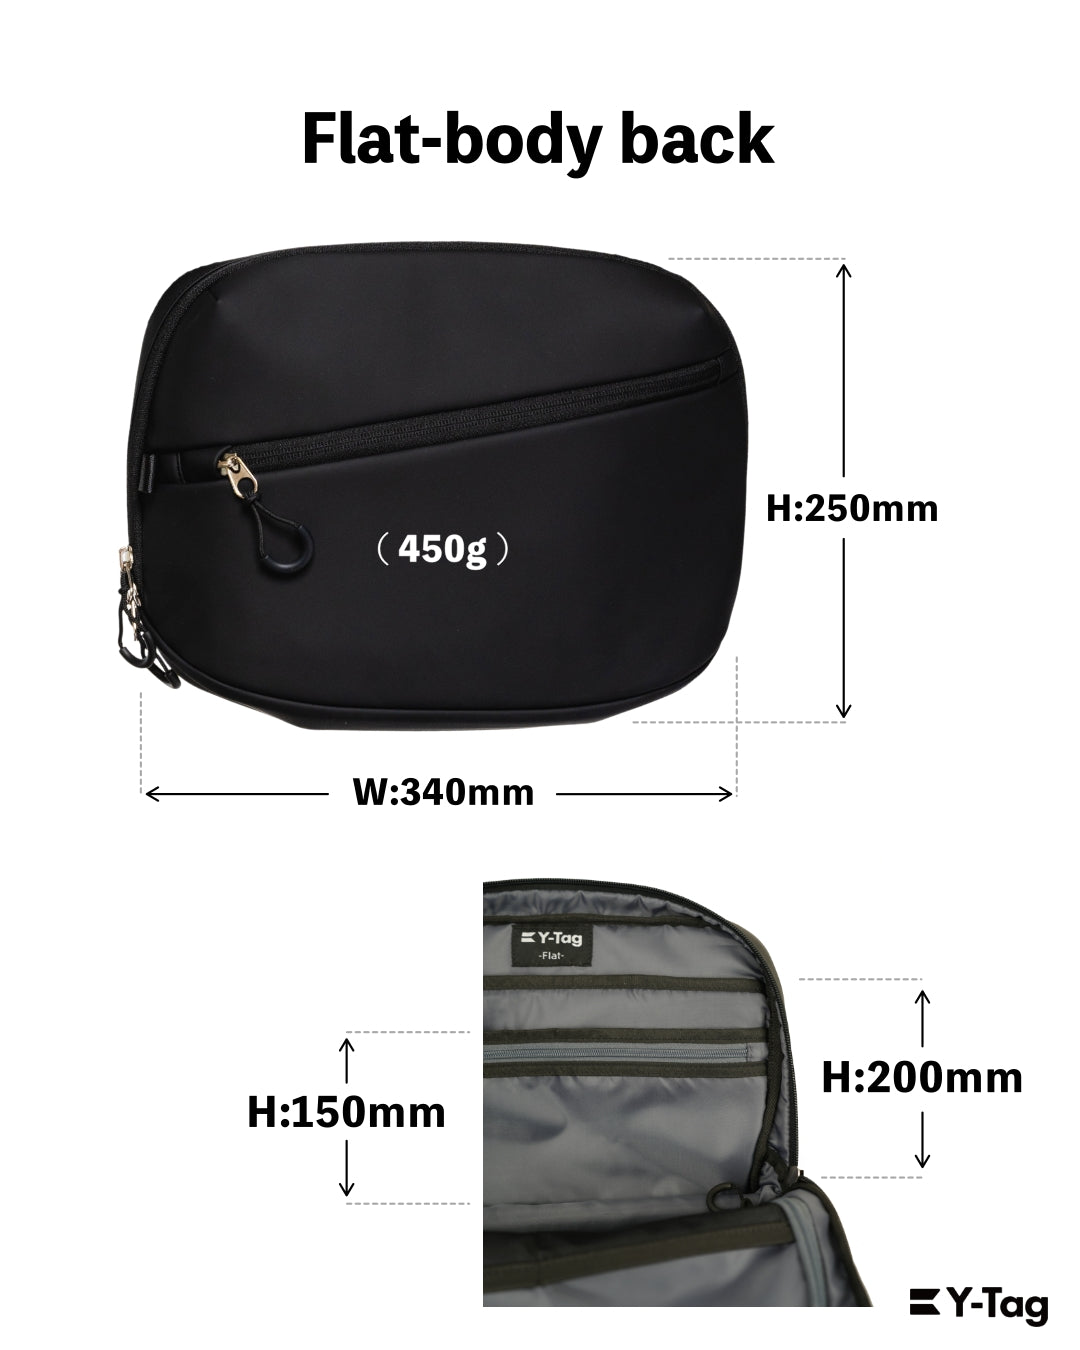 Flat-body bag